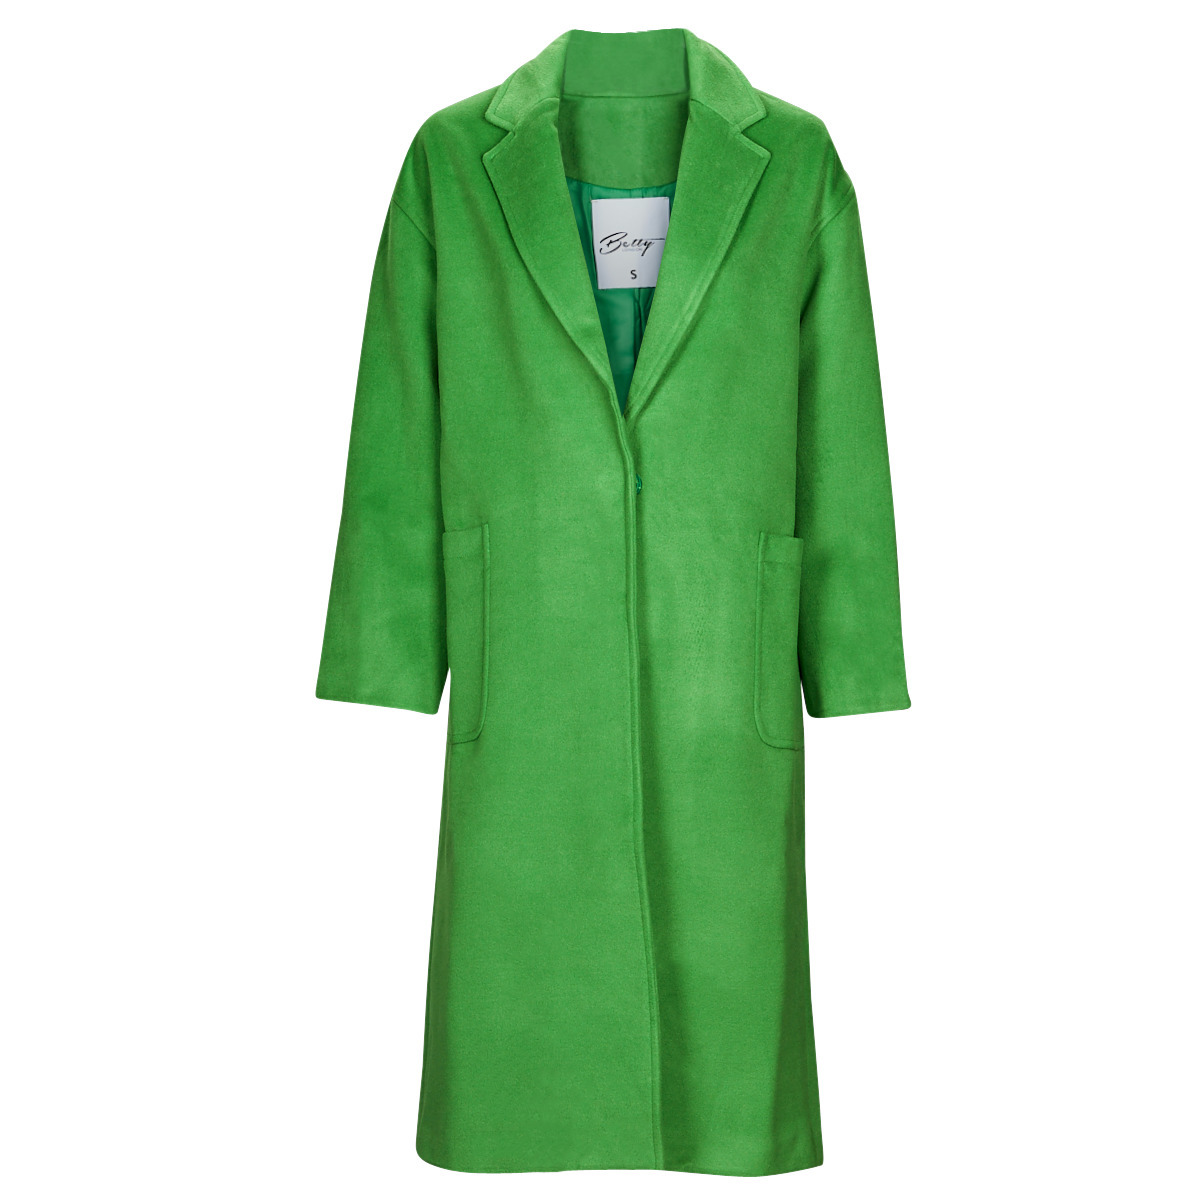 Betty London Ladies Green Coat at Spartoo GOOFASH